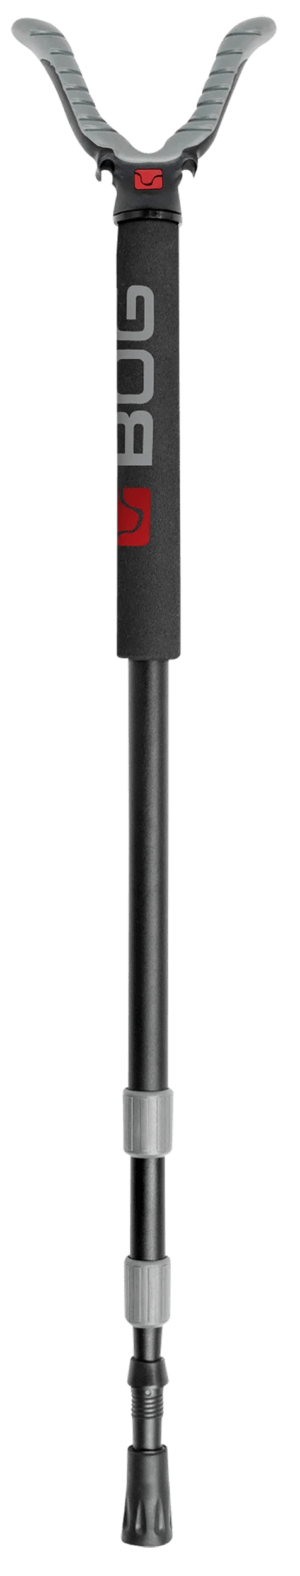 Bog-Pod 1100477 Havoc  Monopod  Black Aluminum with Foam Grip & Rubber Feet  USR Yoke  360 Degree Rotation  23-49″ Vertical Adj.